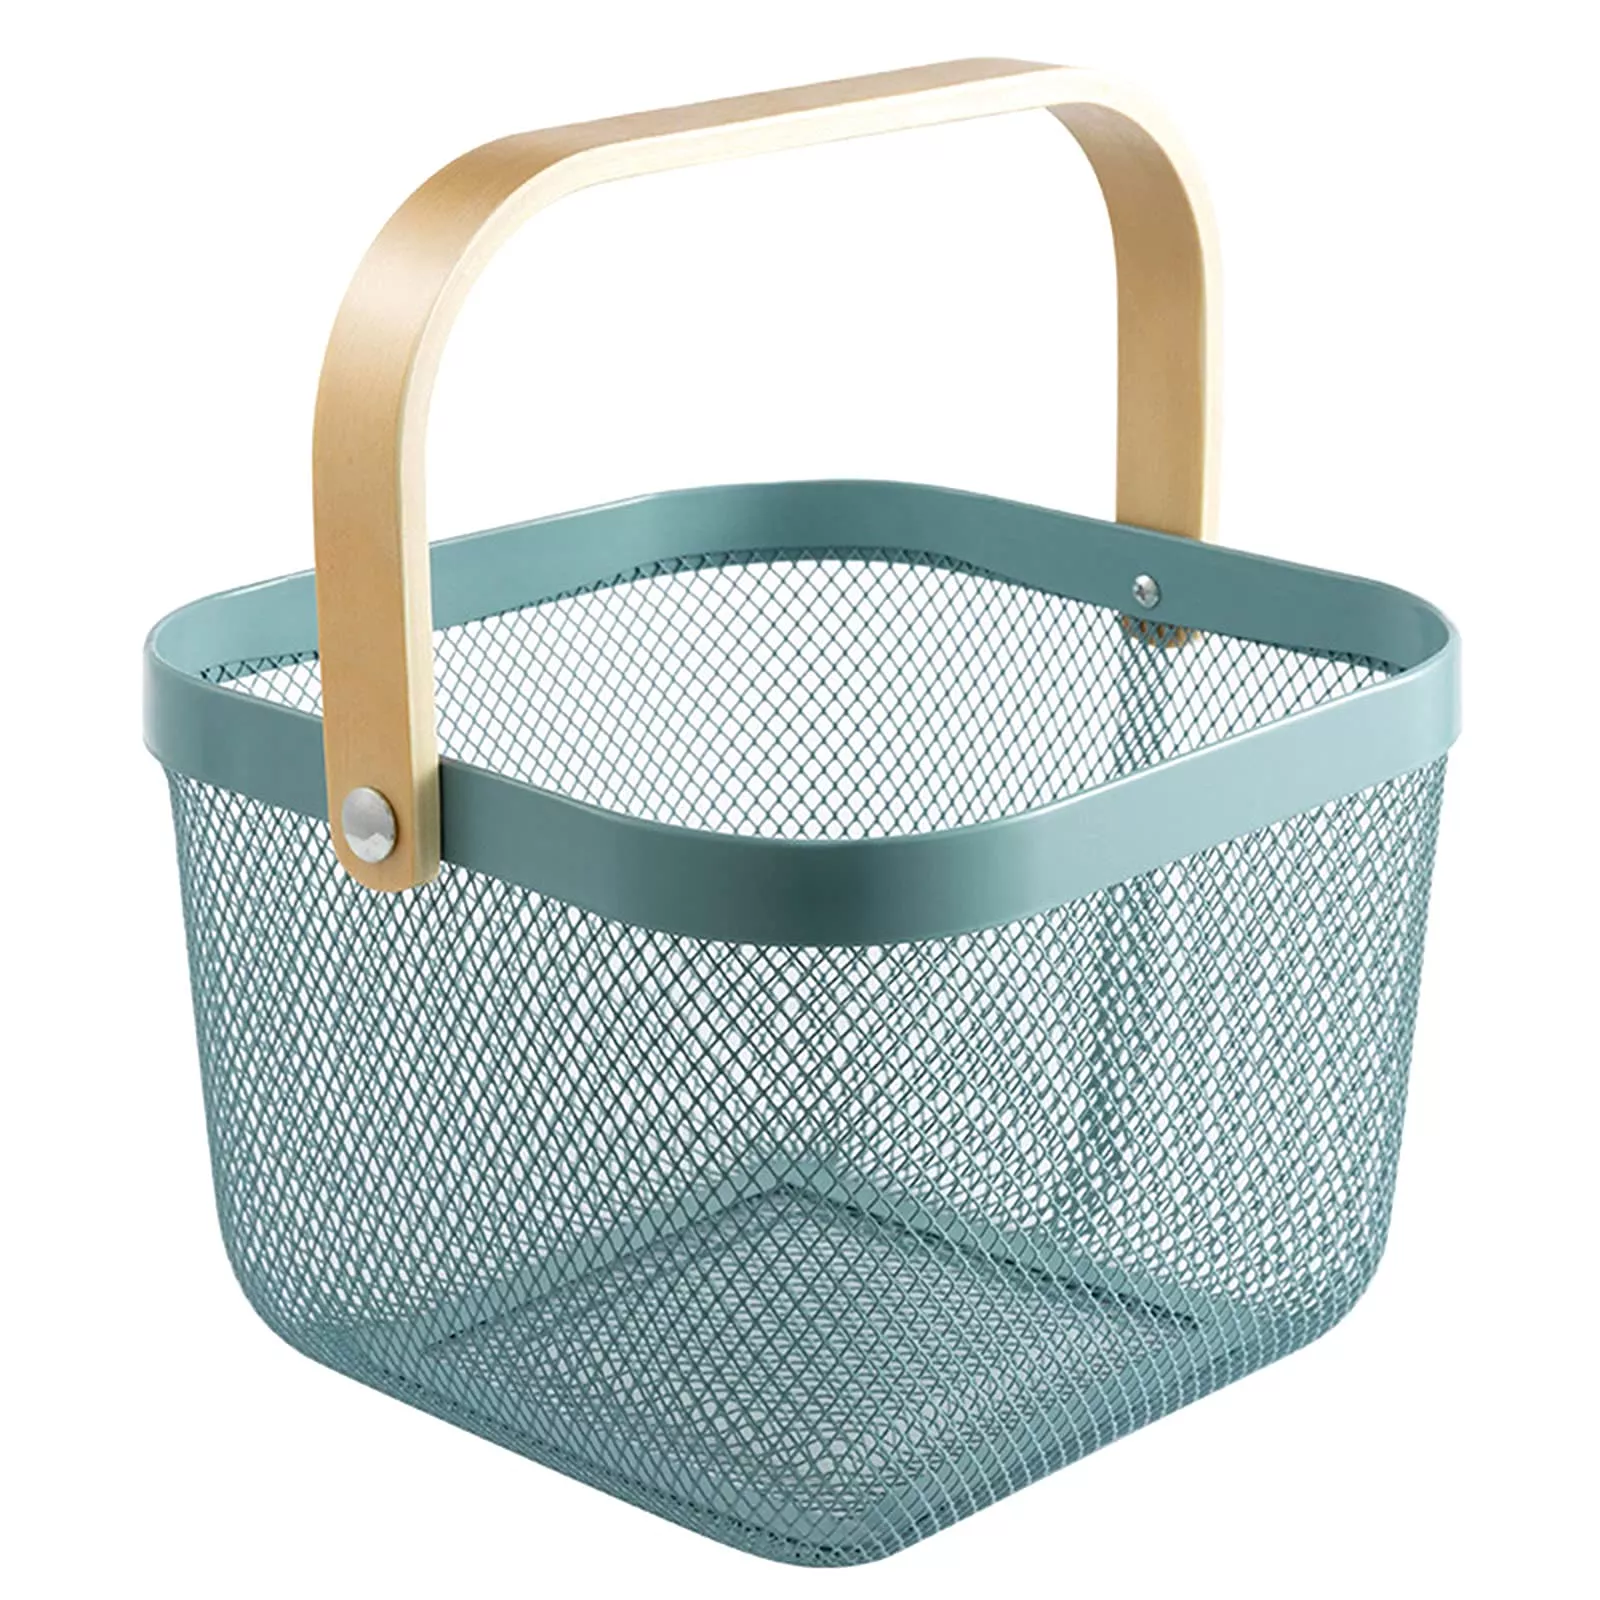 RISATORP Wire basket, white, 9 ¾x10 ¼x7 - IKEA